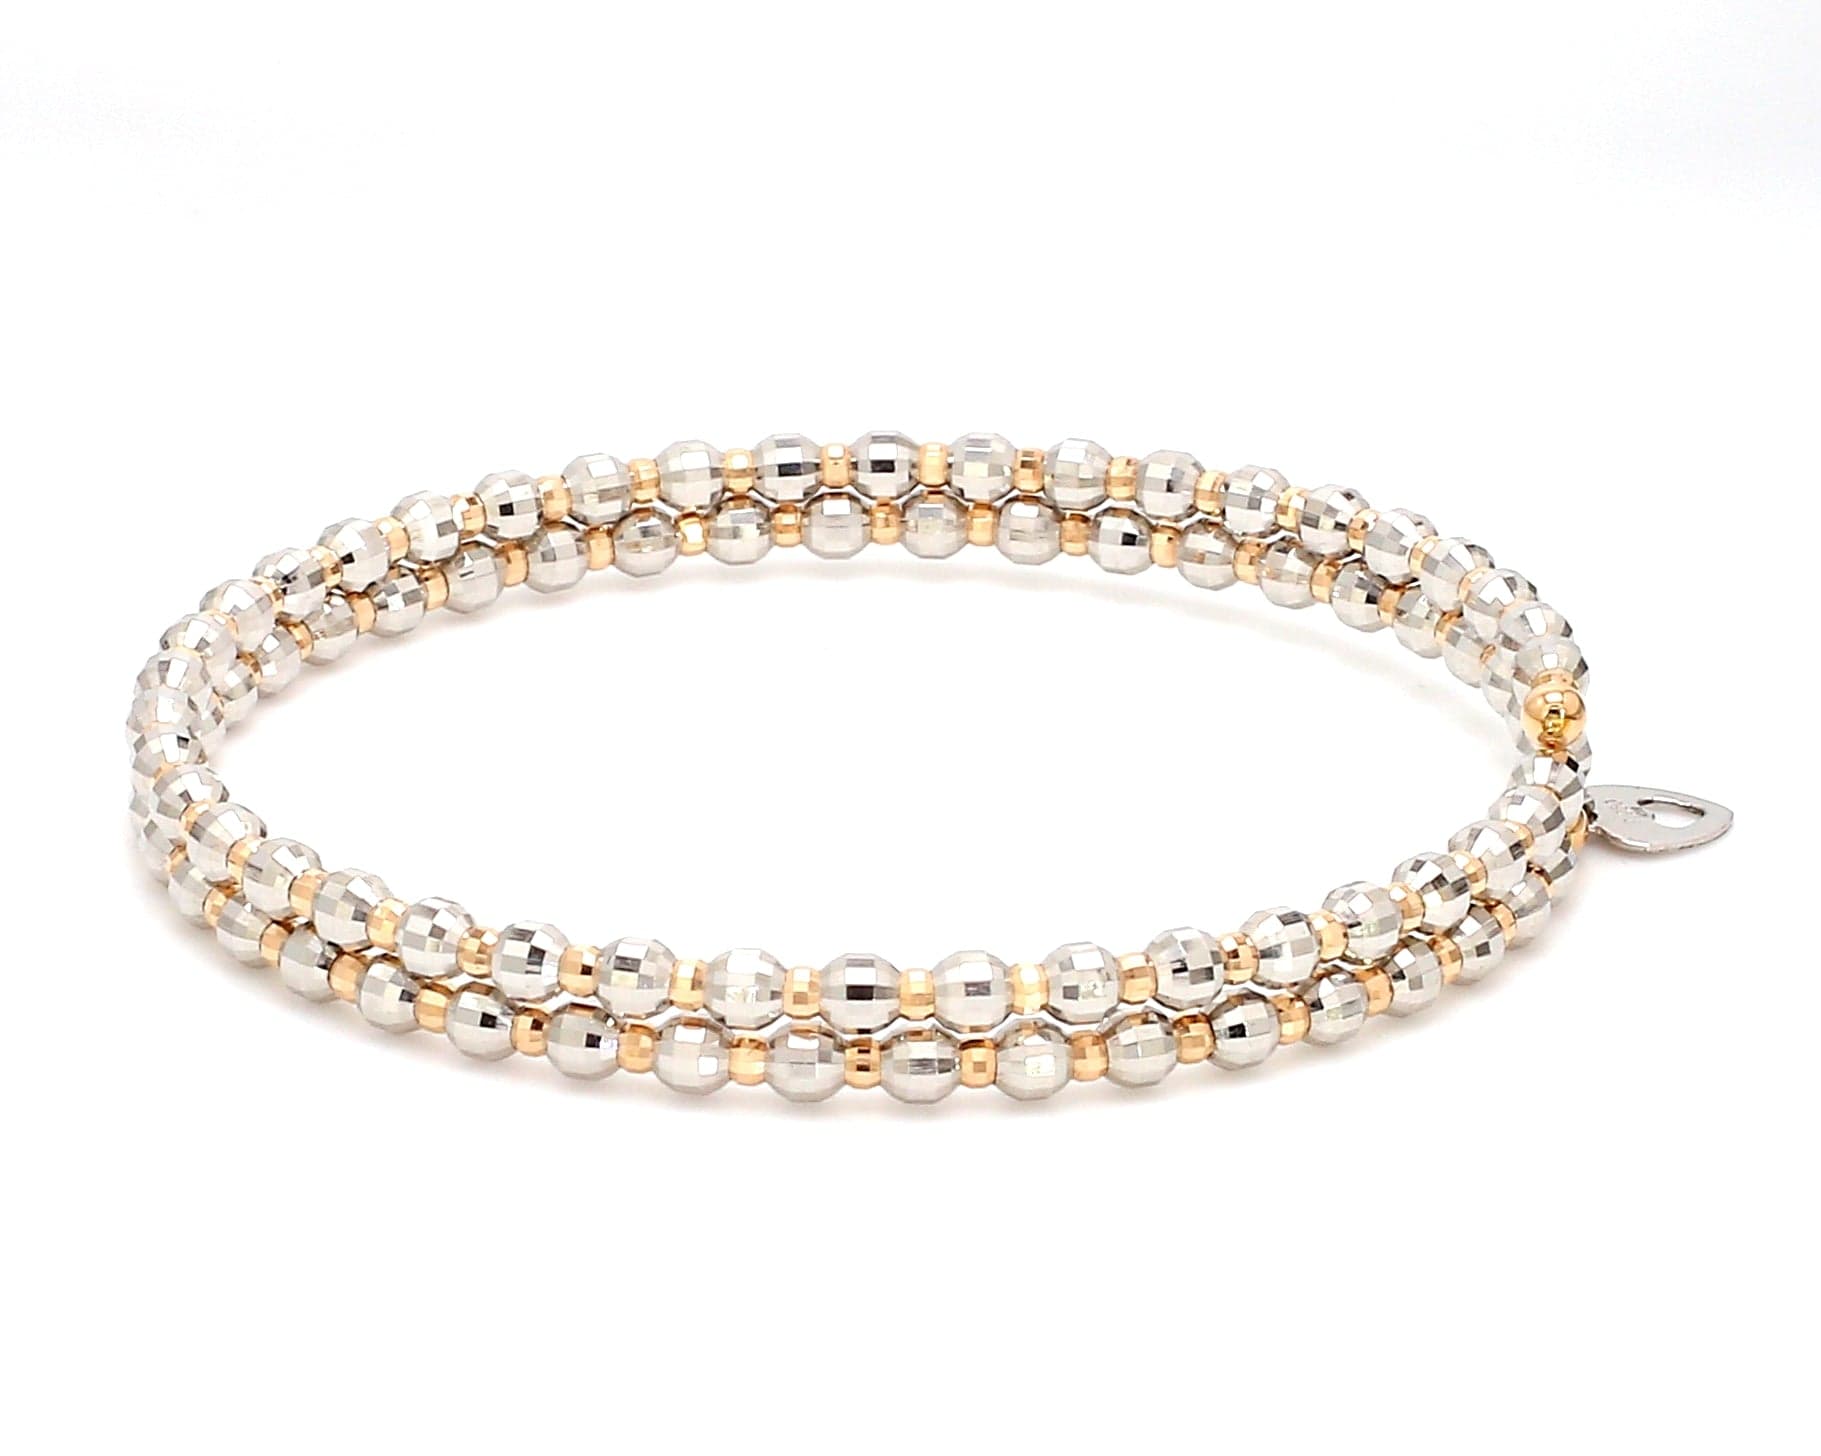 White Ladies Bracelet with Rose Gold Polish  Gift for Girl Friend   Corporate Gift  Zoe Floral Bracelet by Blingvine